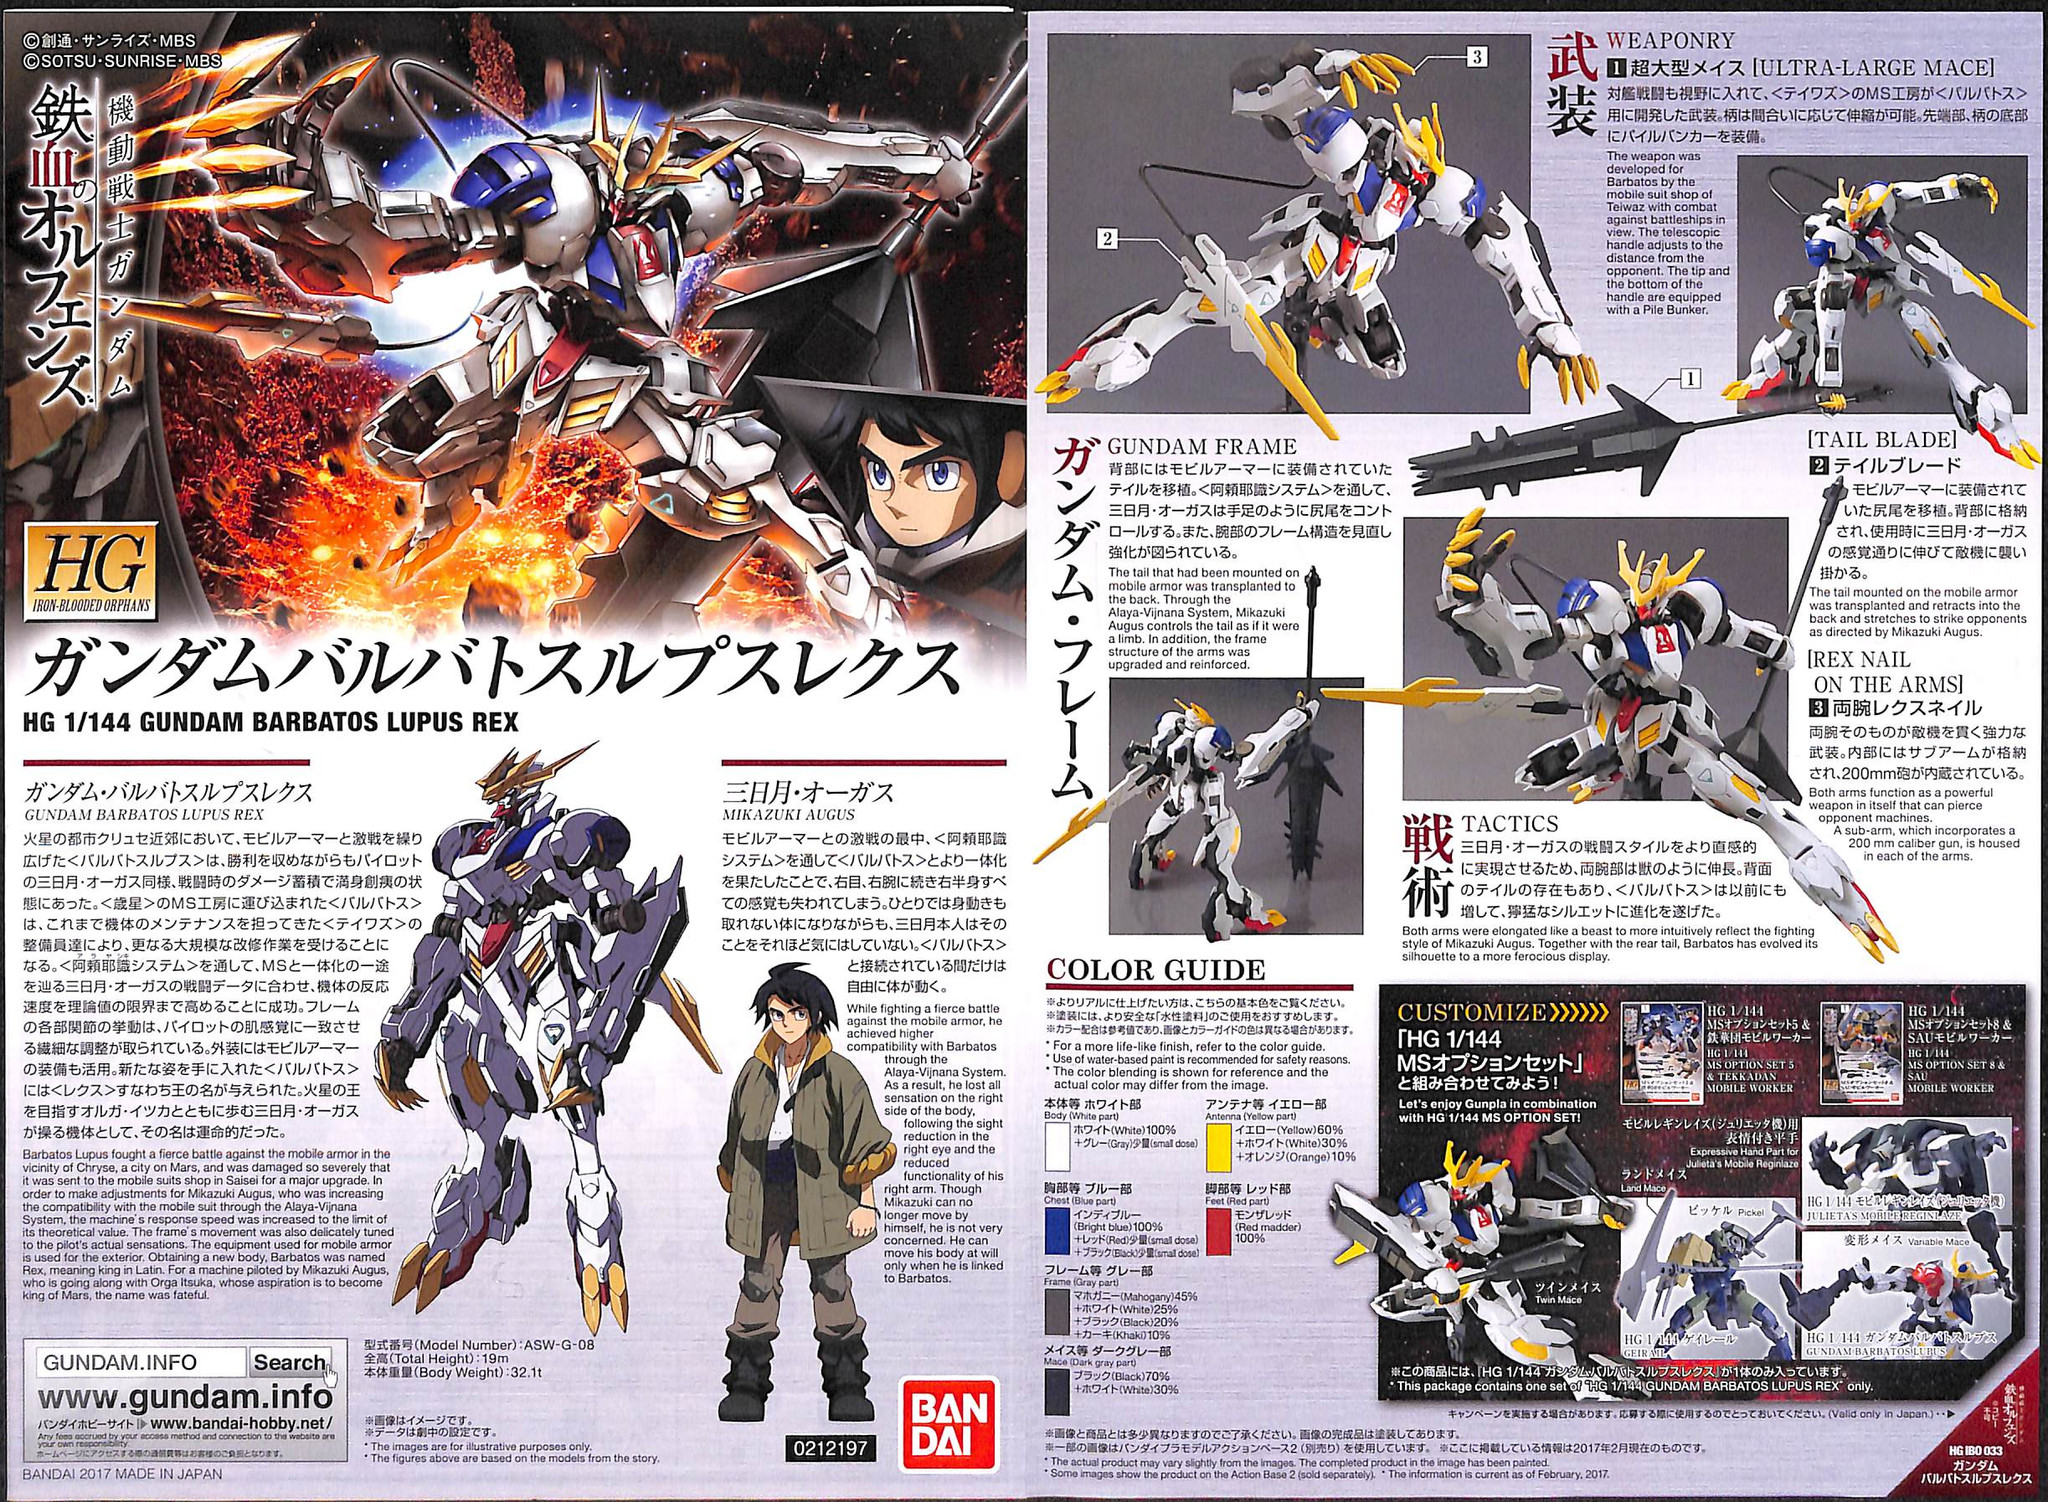 Bandai Iron Blooded Orphans 033 Gundam Barbatos Lupus Rex 1 144